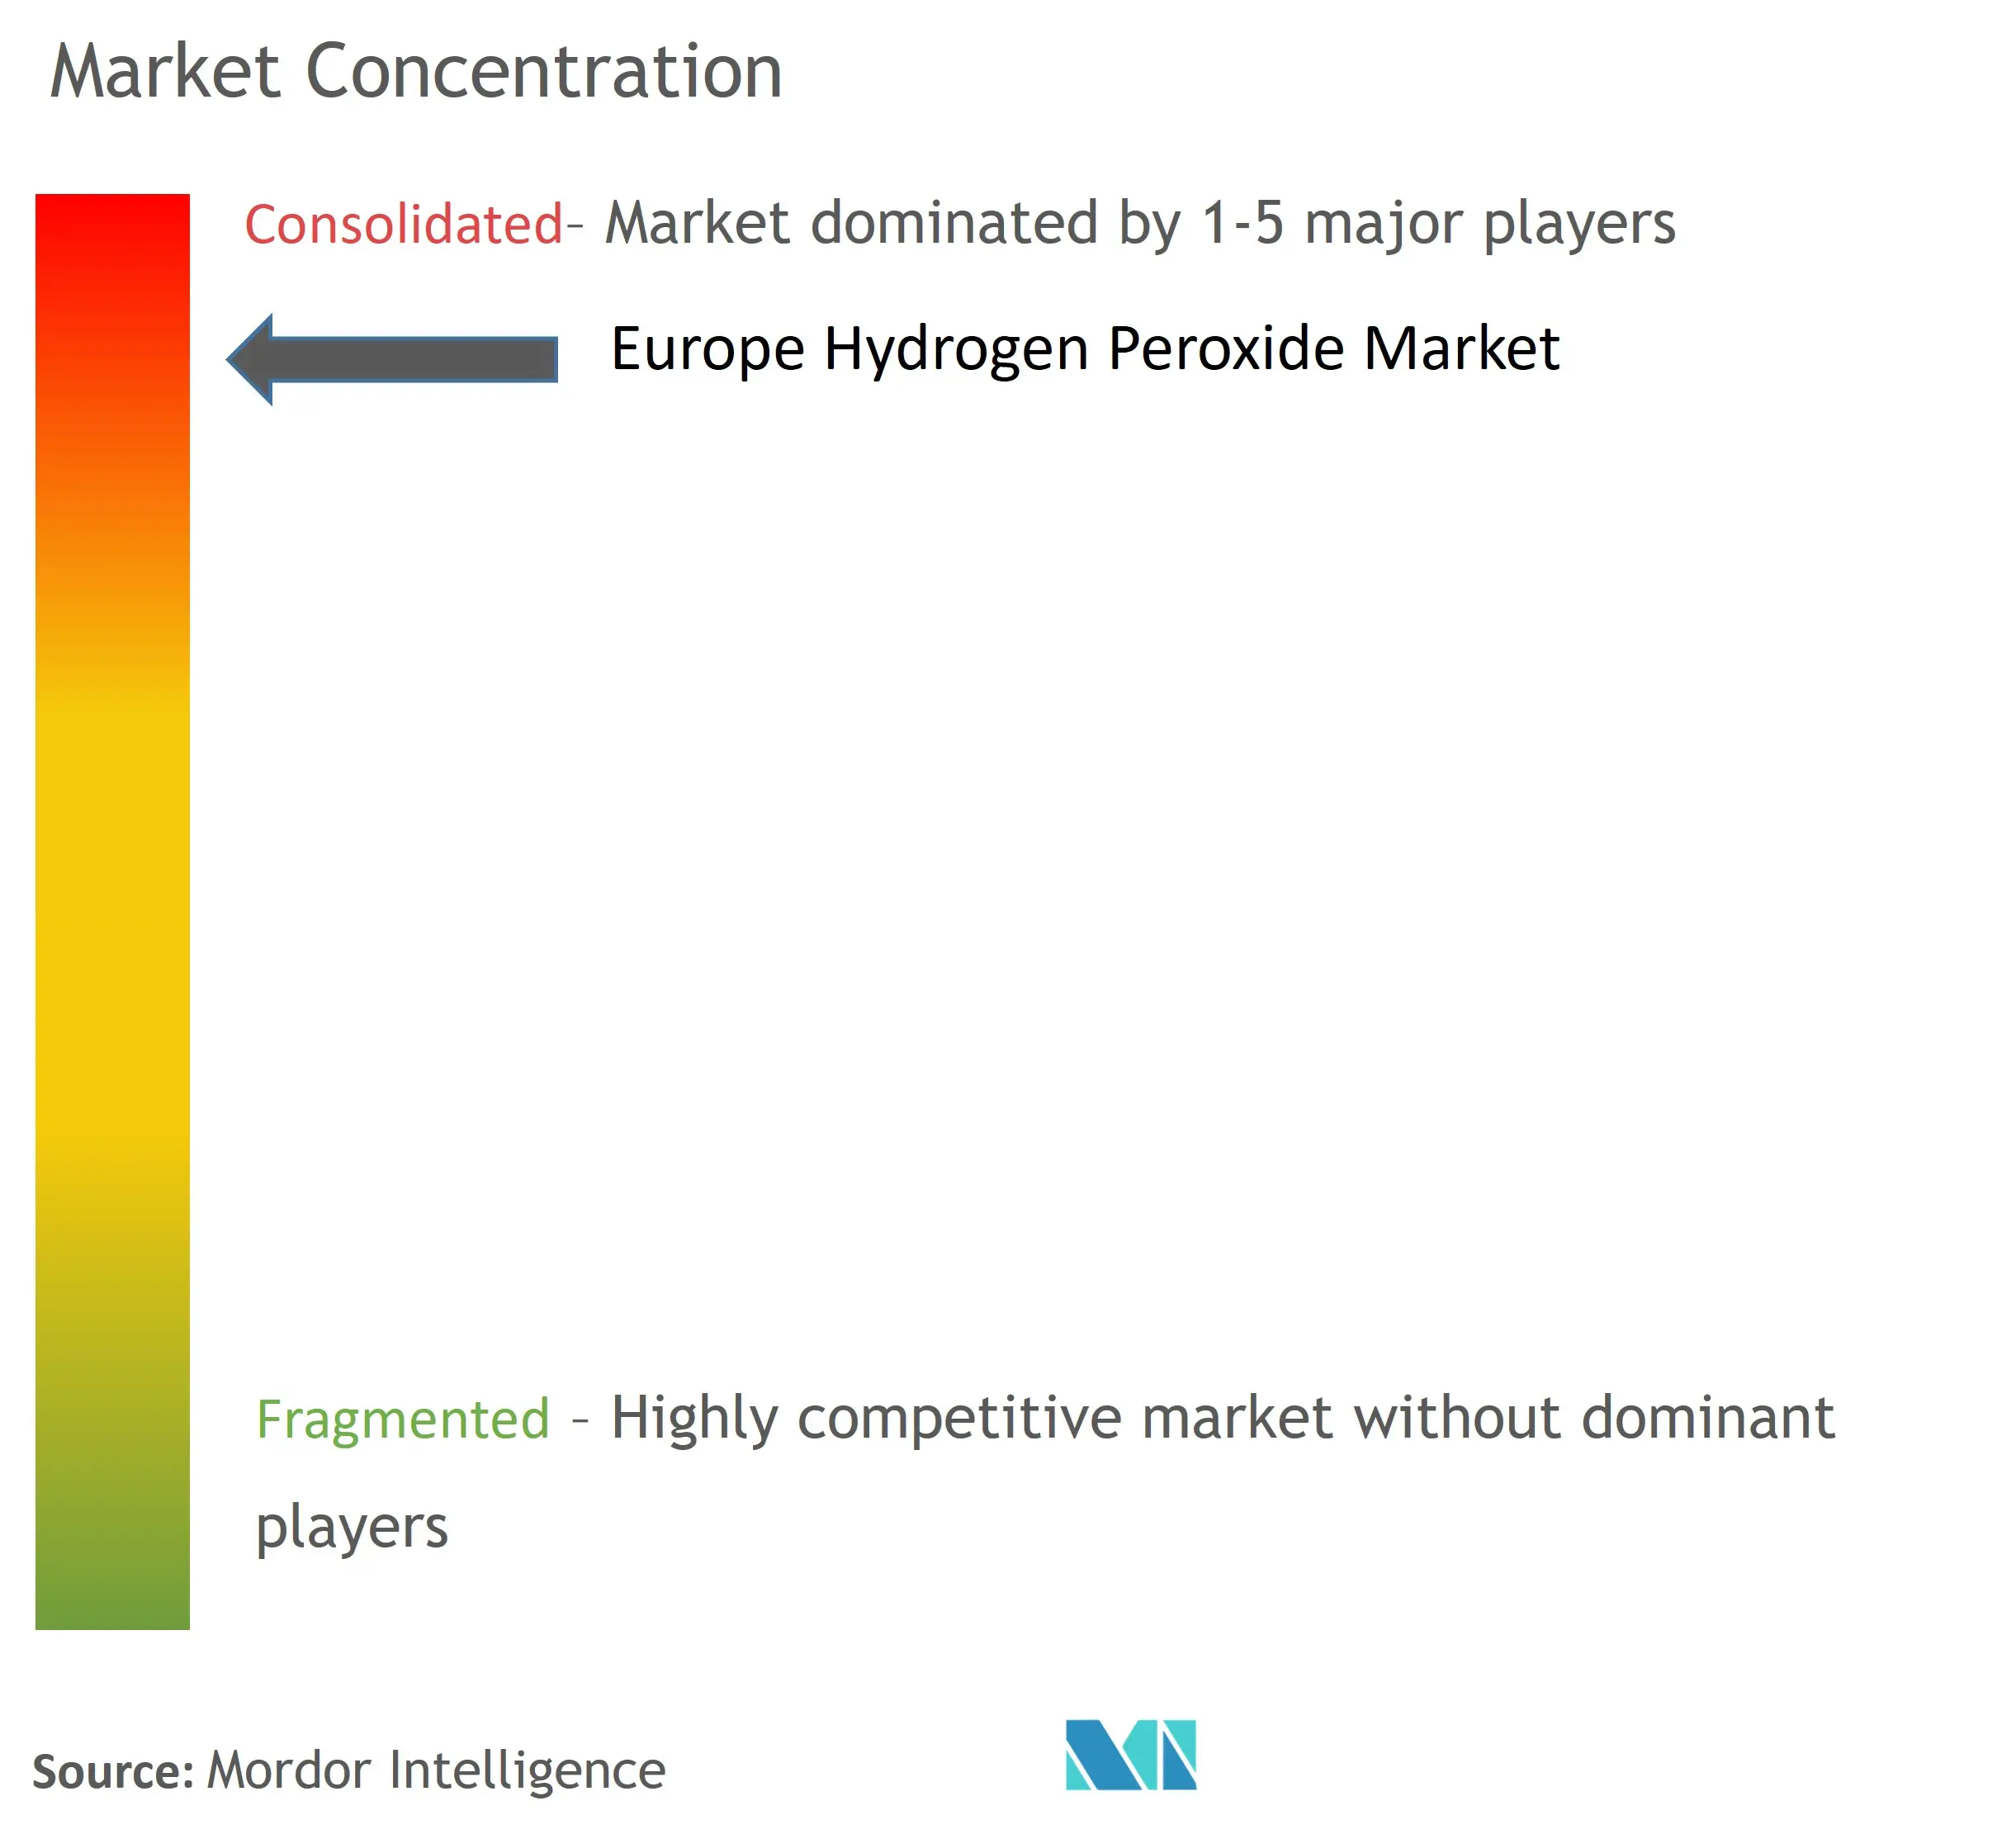 Europe Hydrogen Peroxide Market Concentration